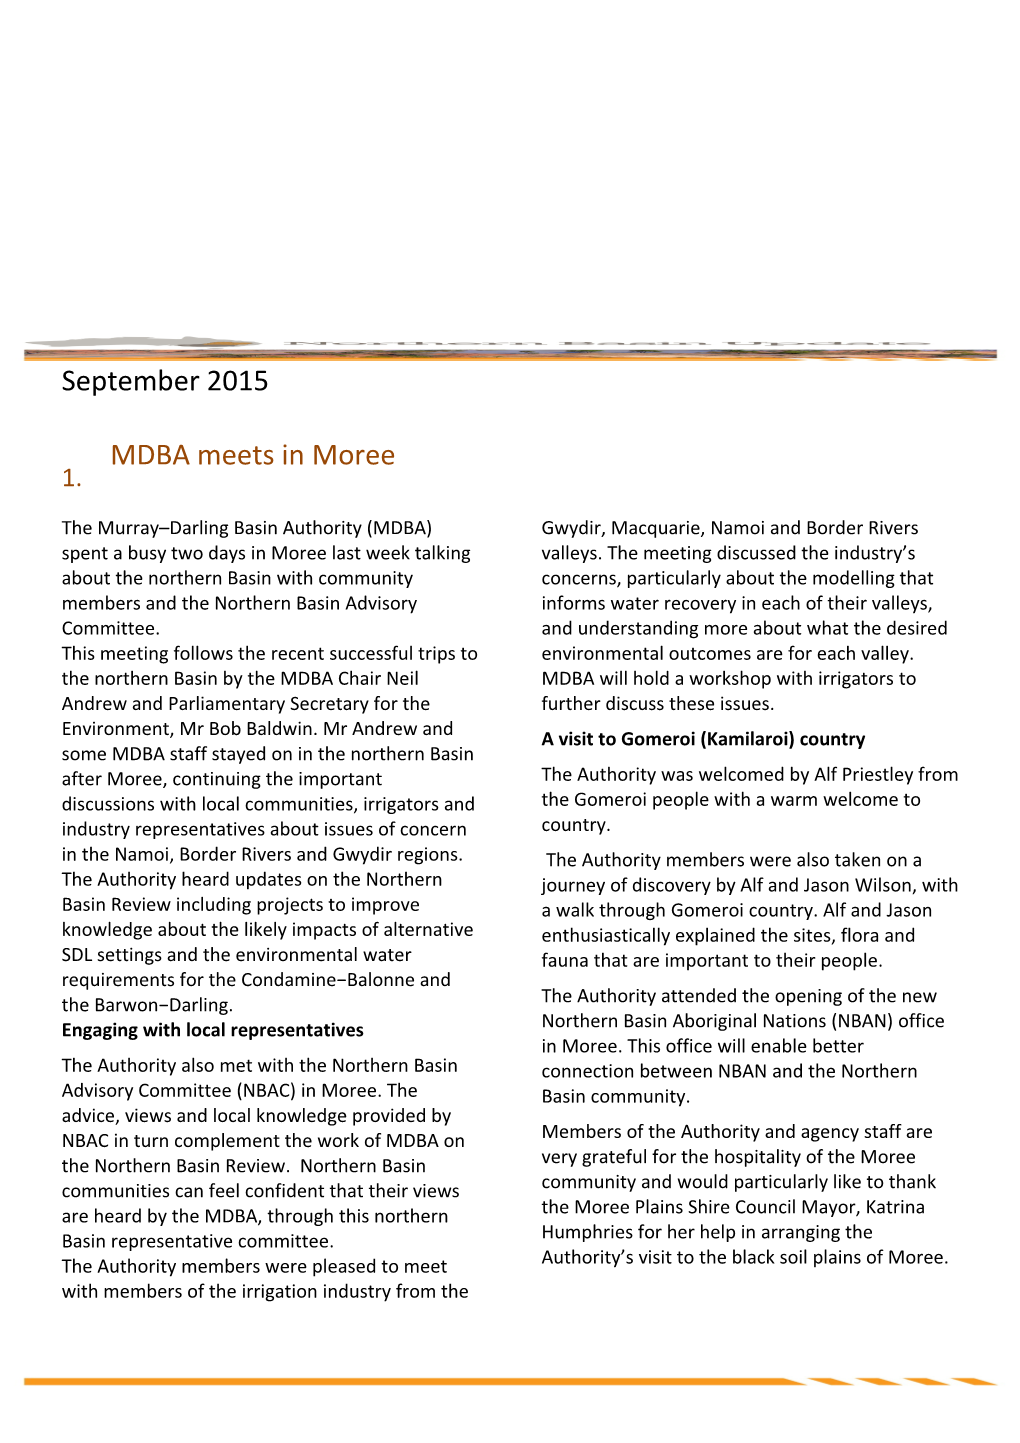 Northern Basin Update - September 2015